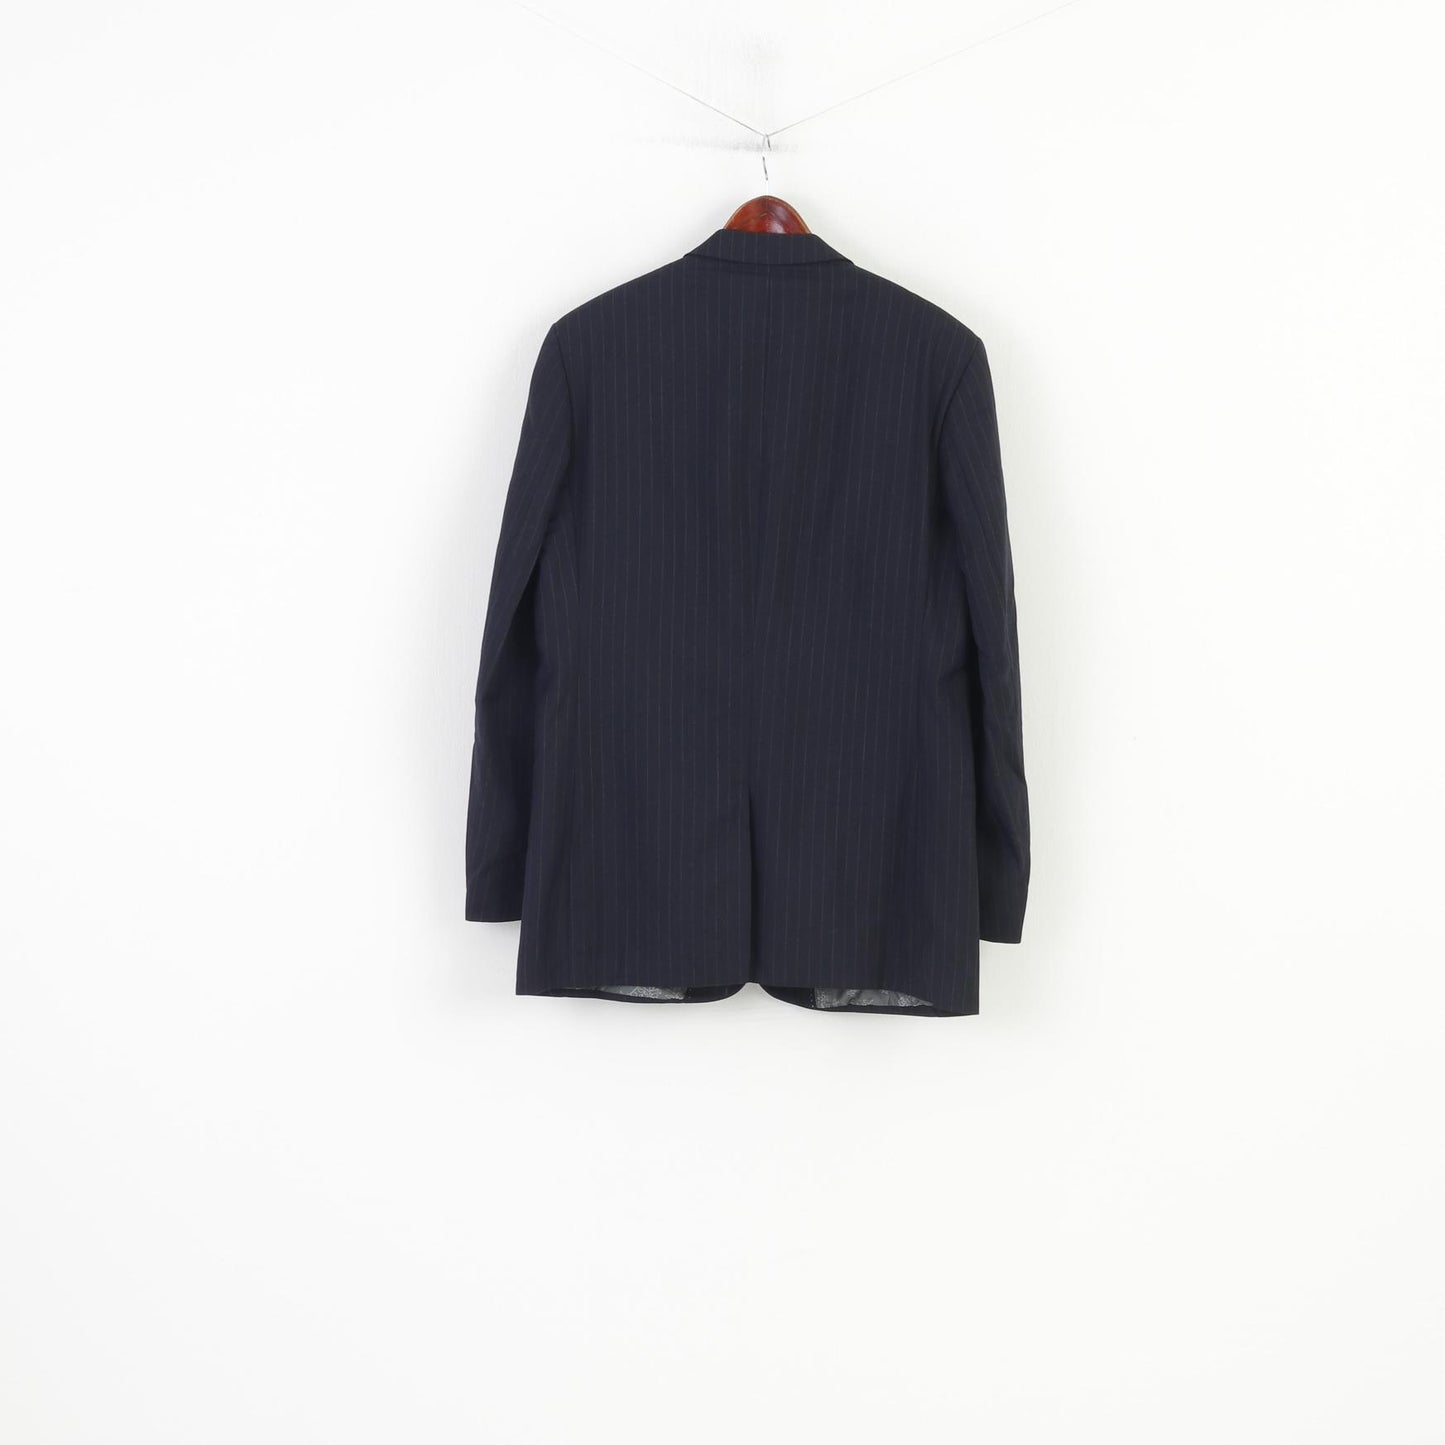 Pierre Cardin Uomo 44 54 Blazer Giacca monopetto vintage in lana a righe blu scuro